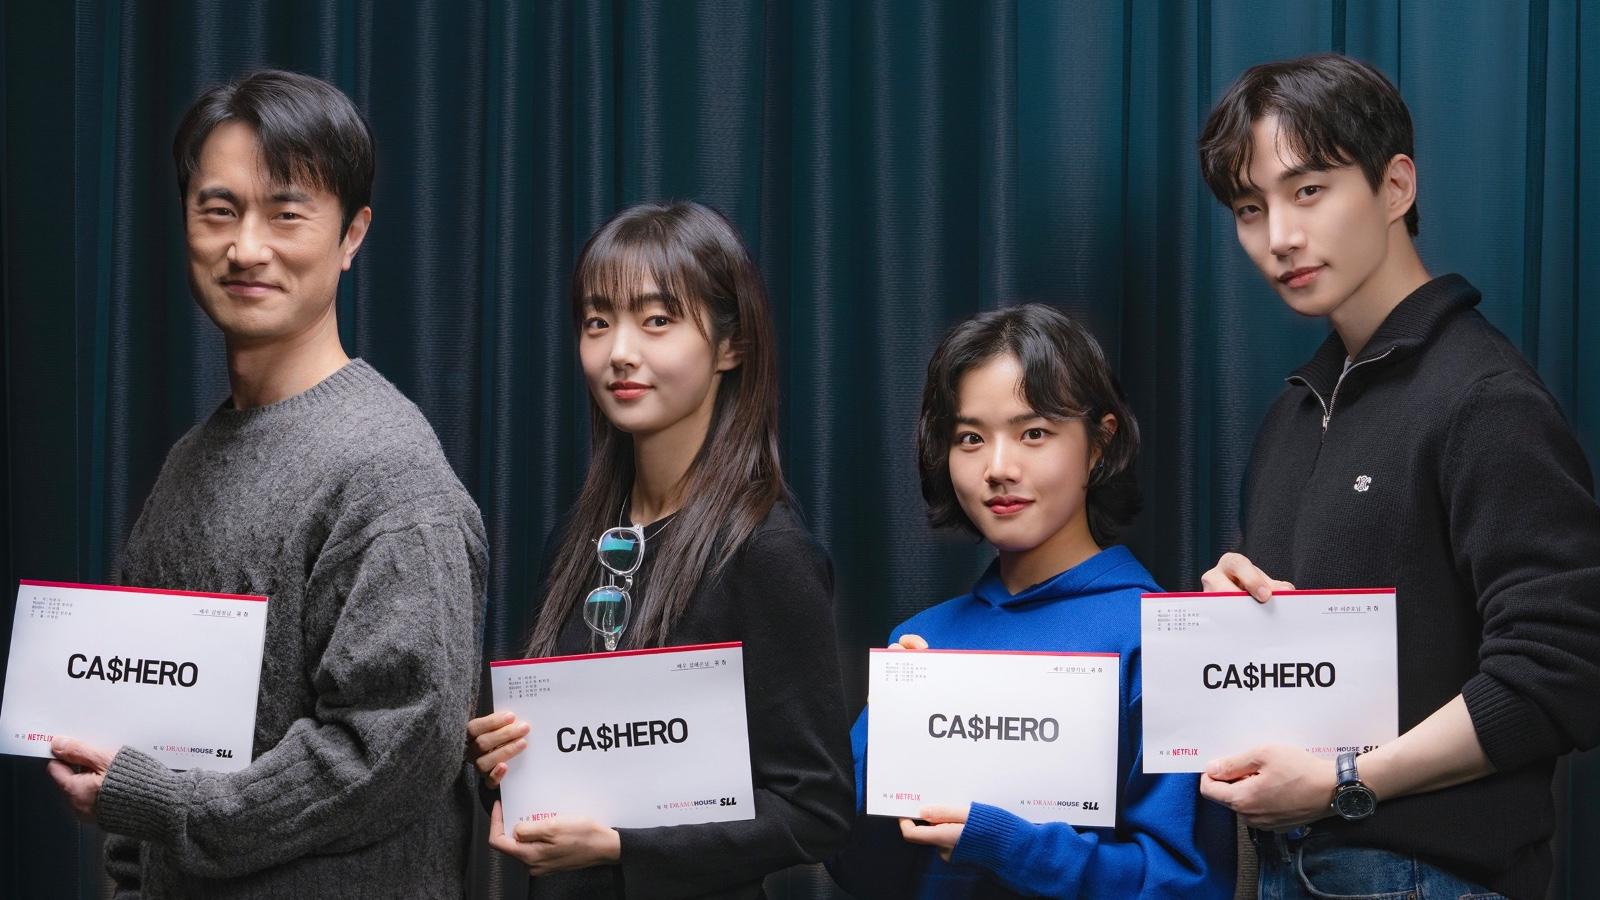 The cast of Cashero K-drama